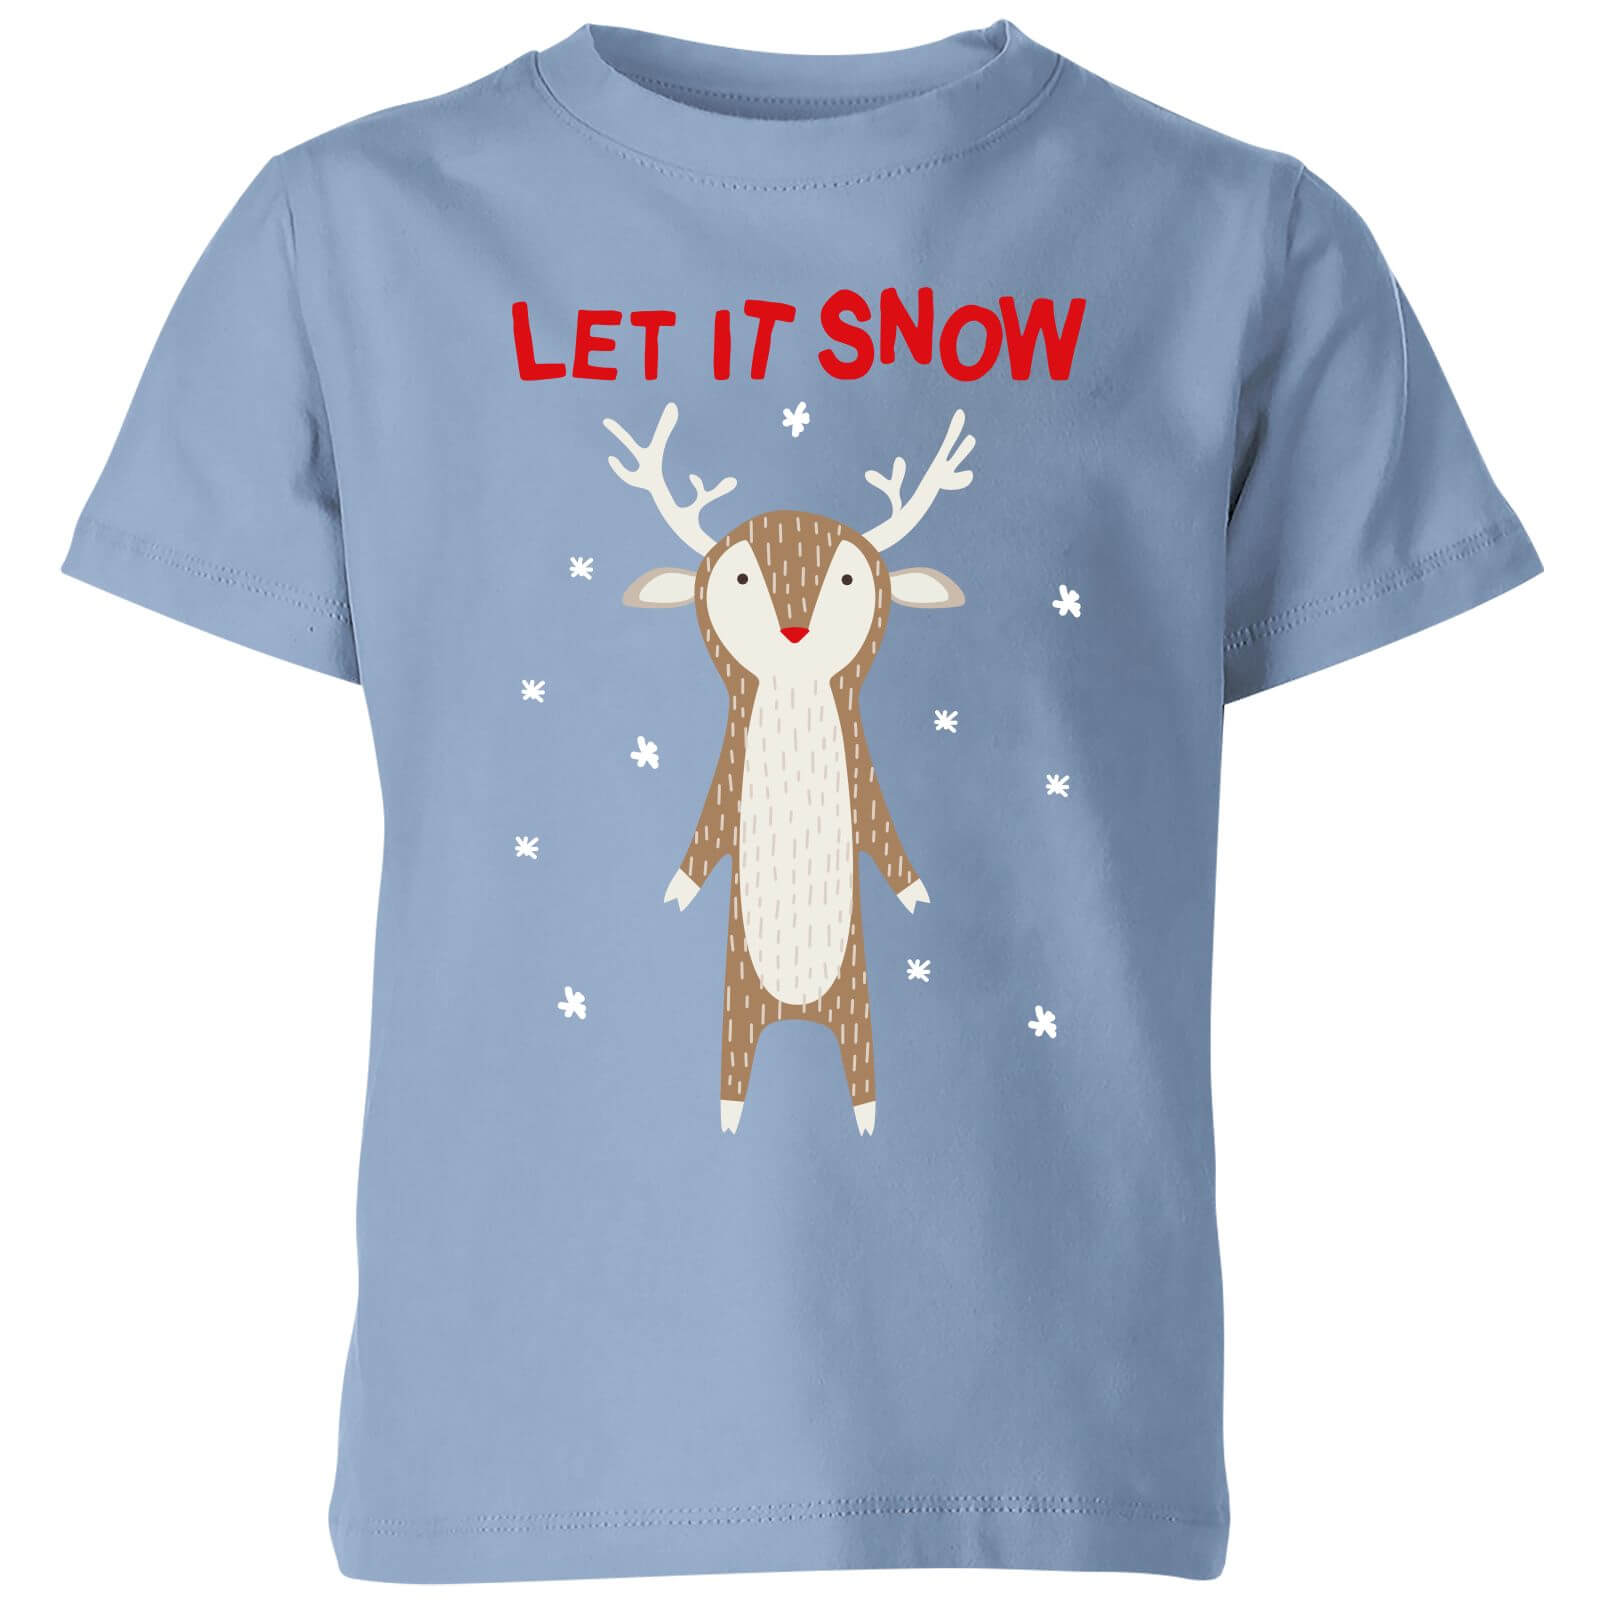 Let It Snow Kids' T-Shirt - Sky Blue - 3-4 Years - Sky blue